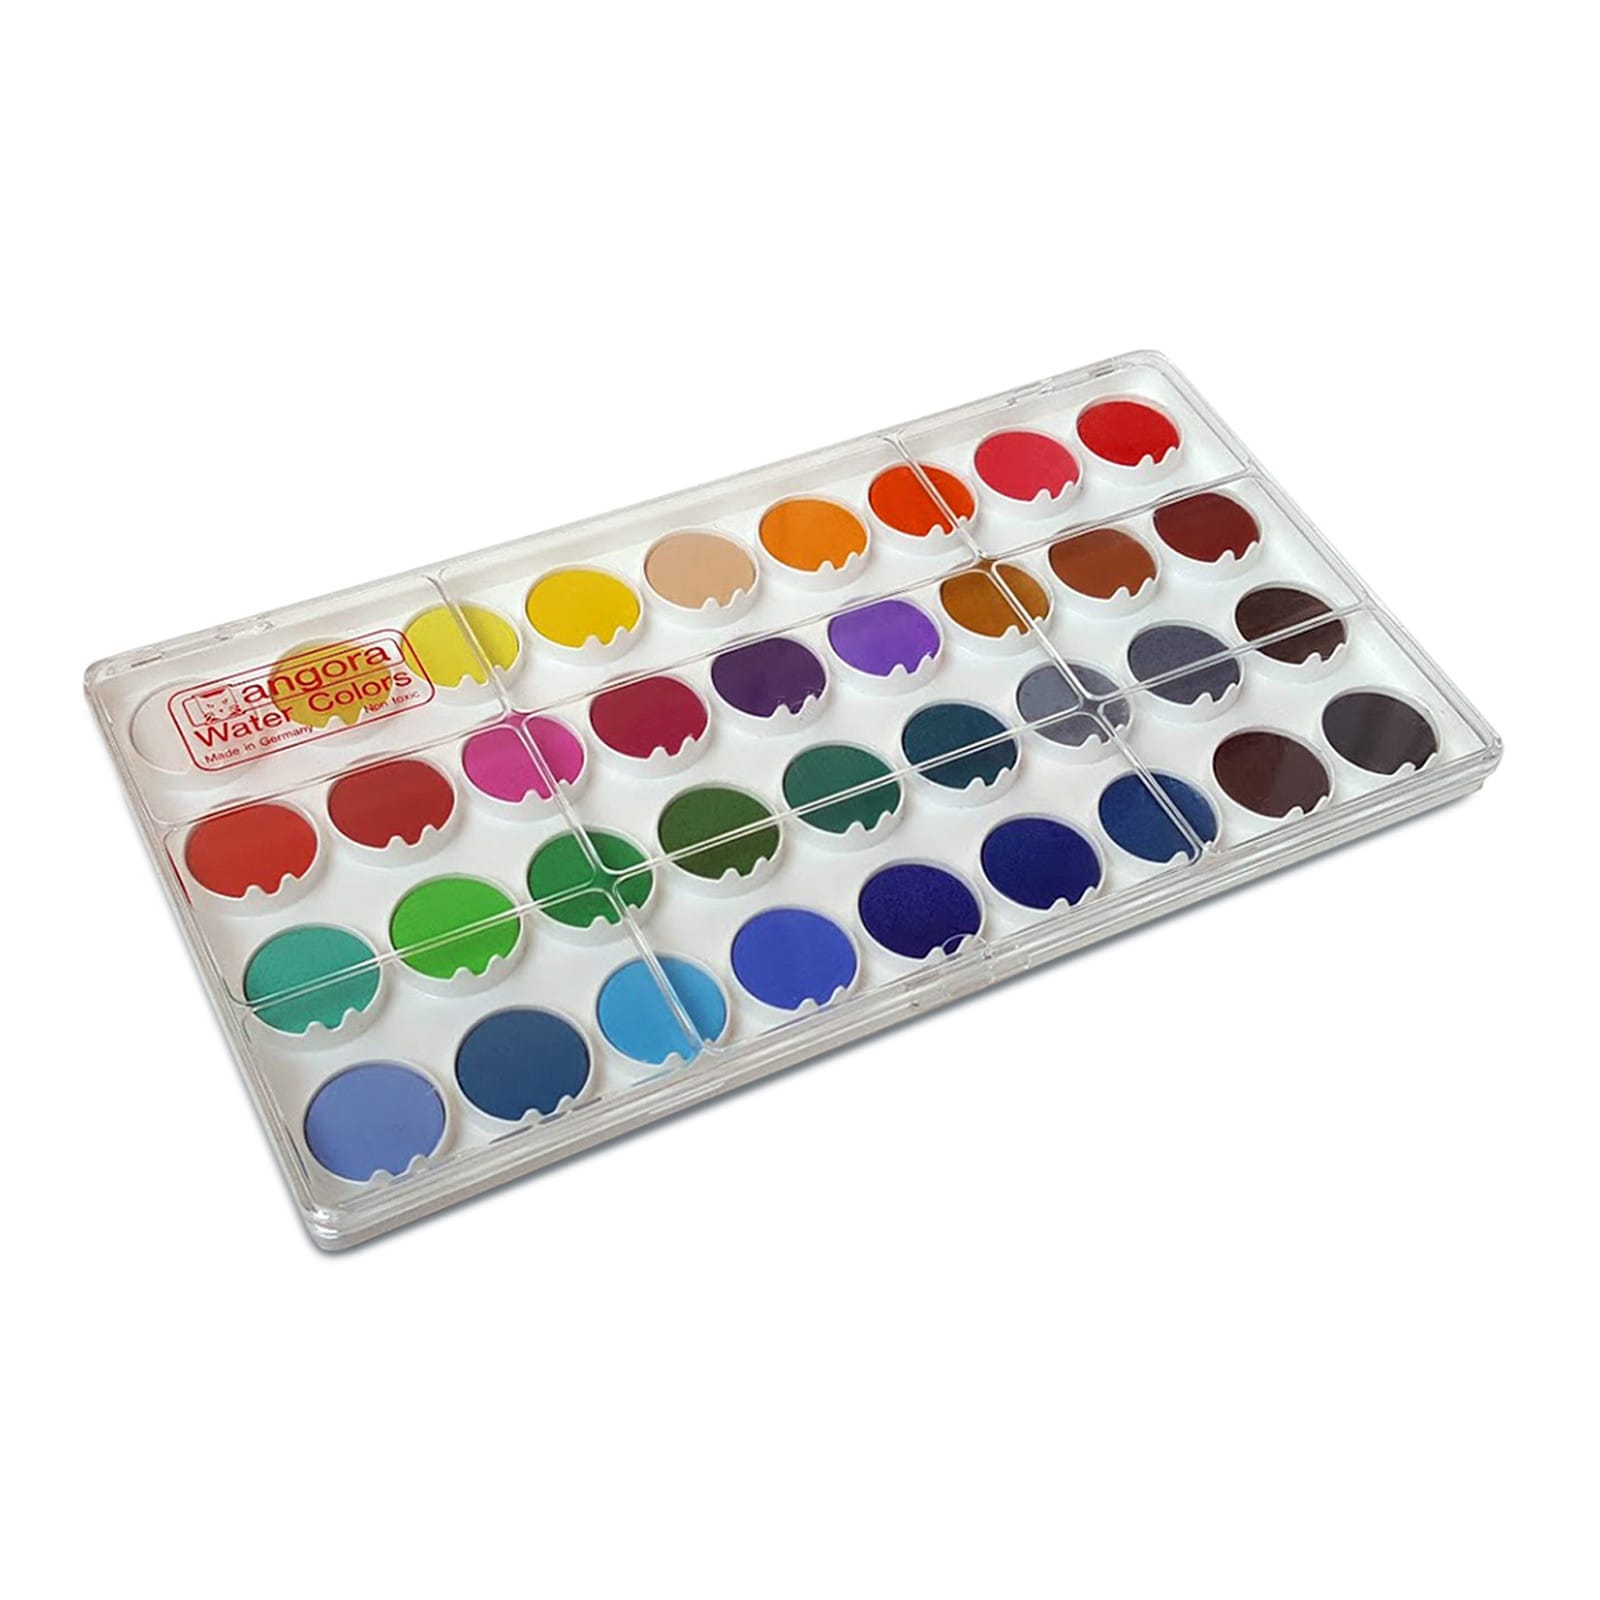 Metallic 16 Color Washable Watercolor Paint Pan Set by Creatology™